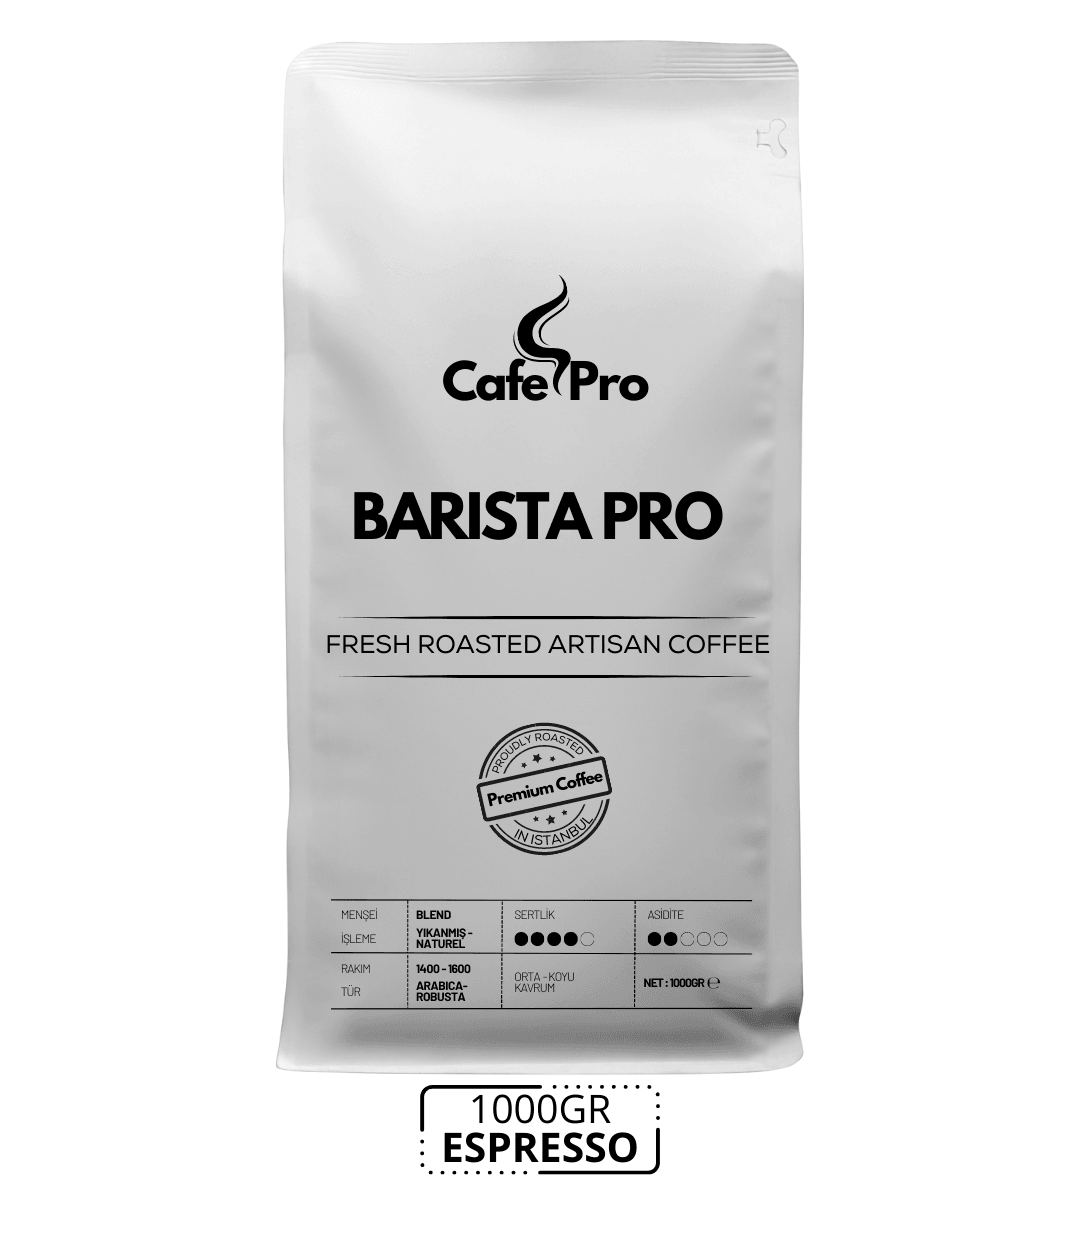 CafePro Barista Pro Espresso